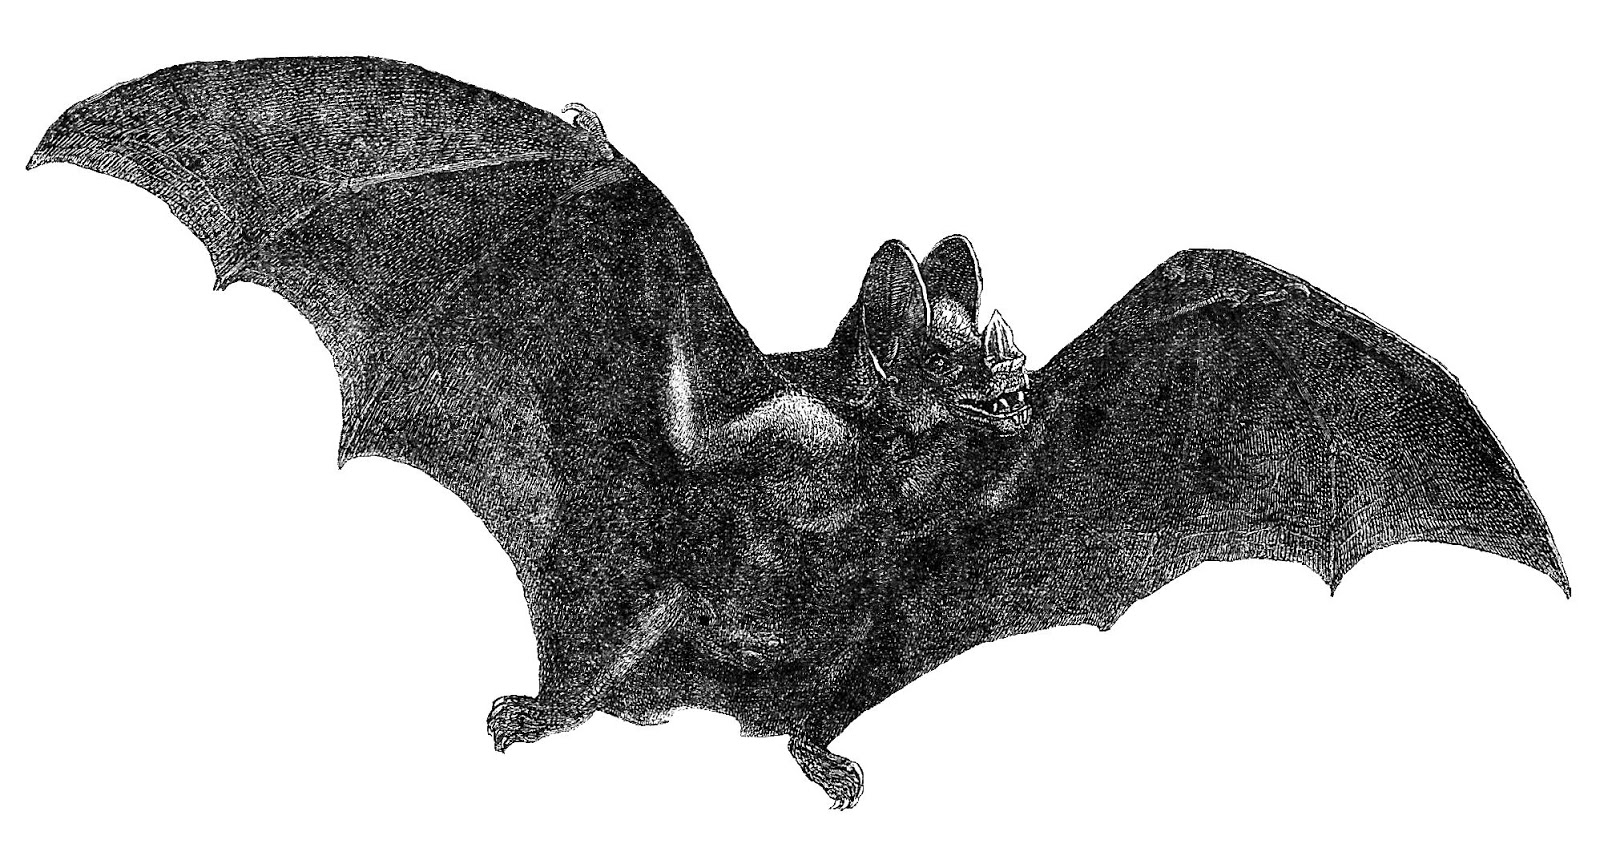 Vampire Bats Are Interesting Creatures.